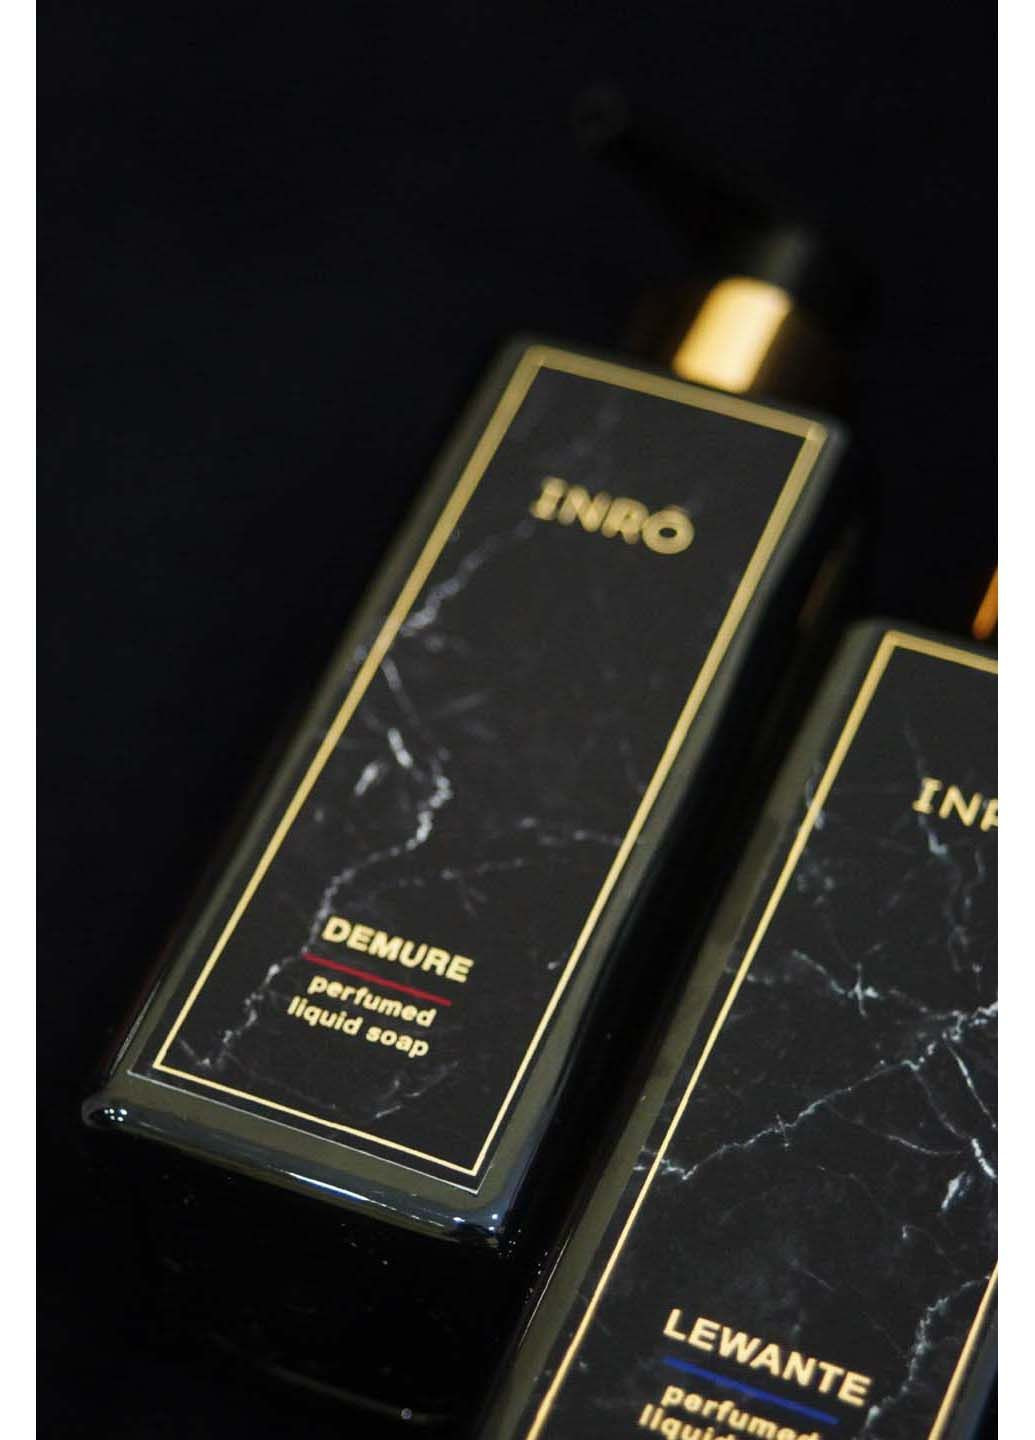 Рідке мило парфумоване Demure 200 мл INRO (288050056)